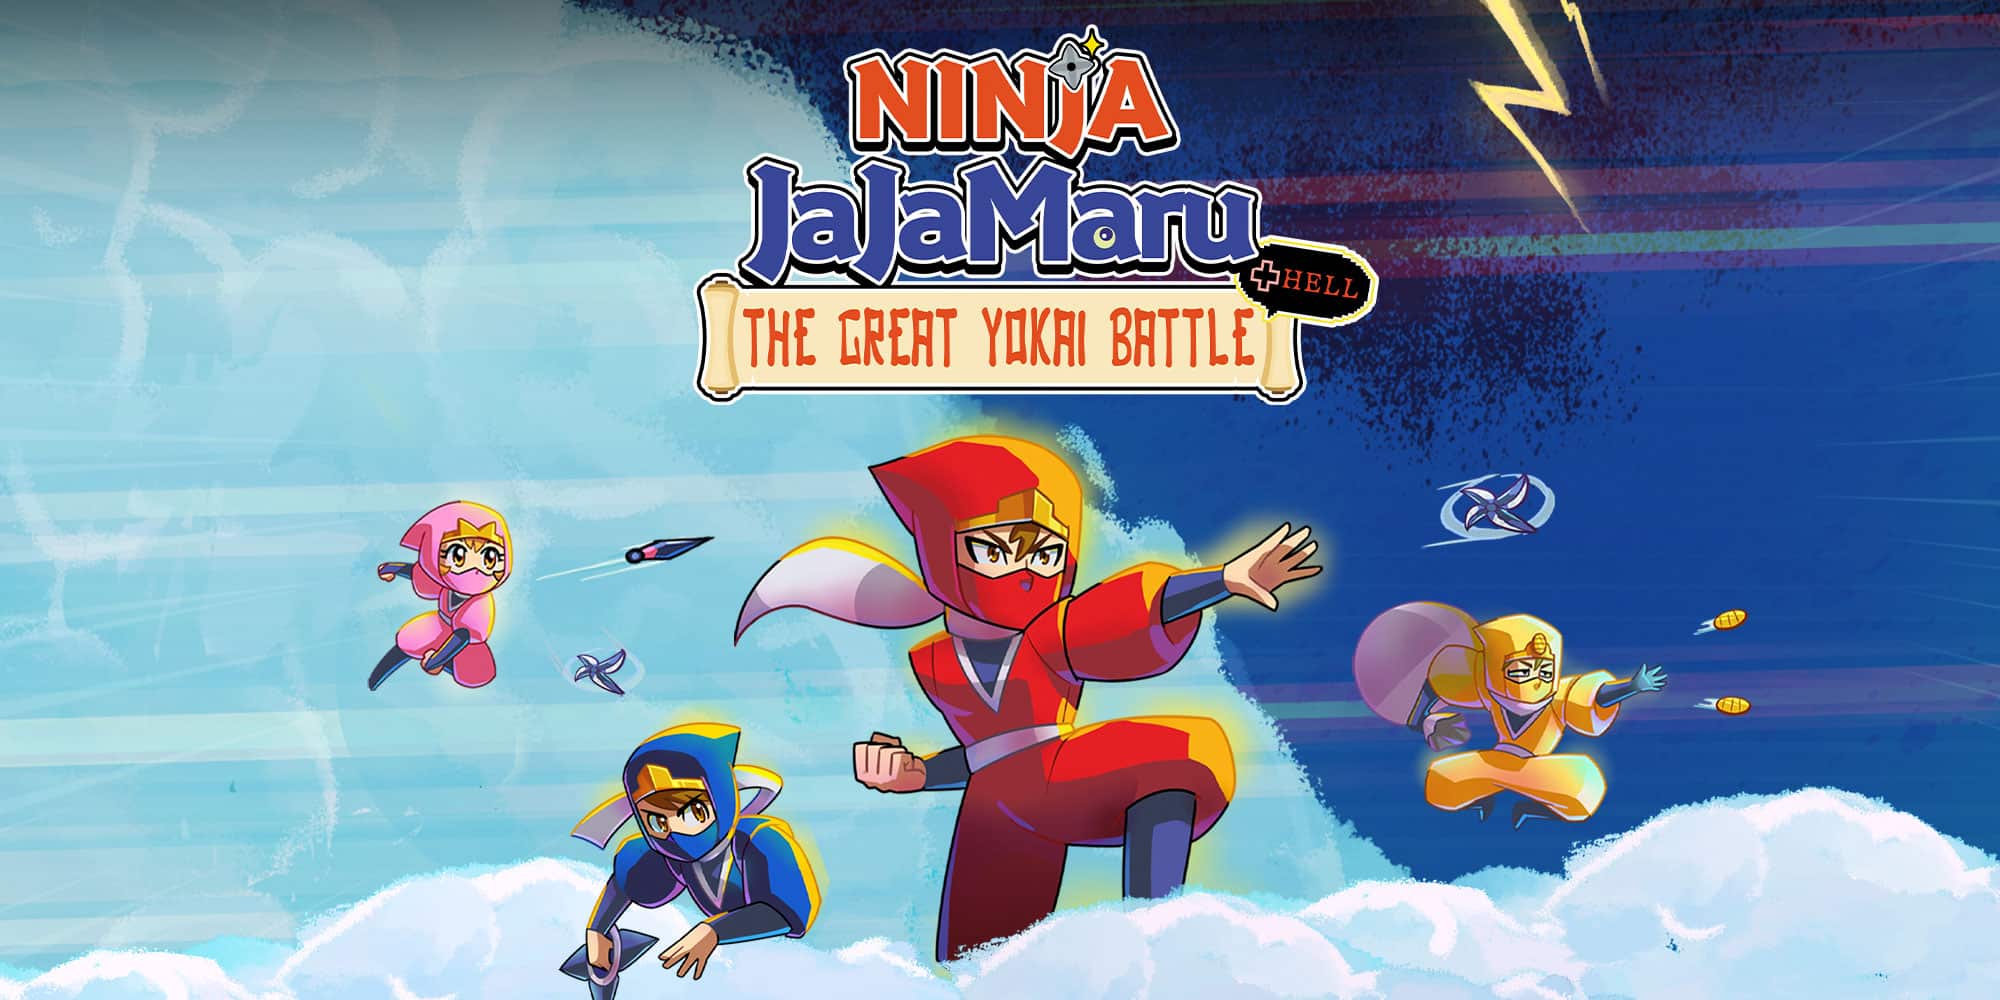 ninja jajamaru: the great yokai battle hell recensione